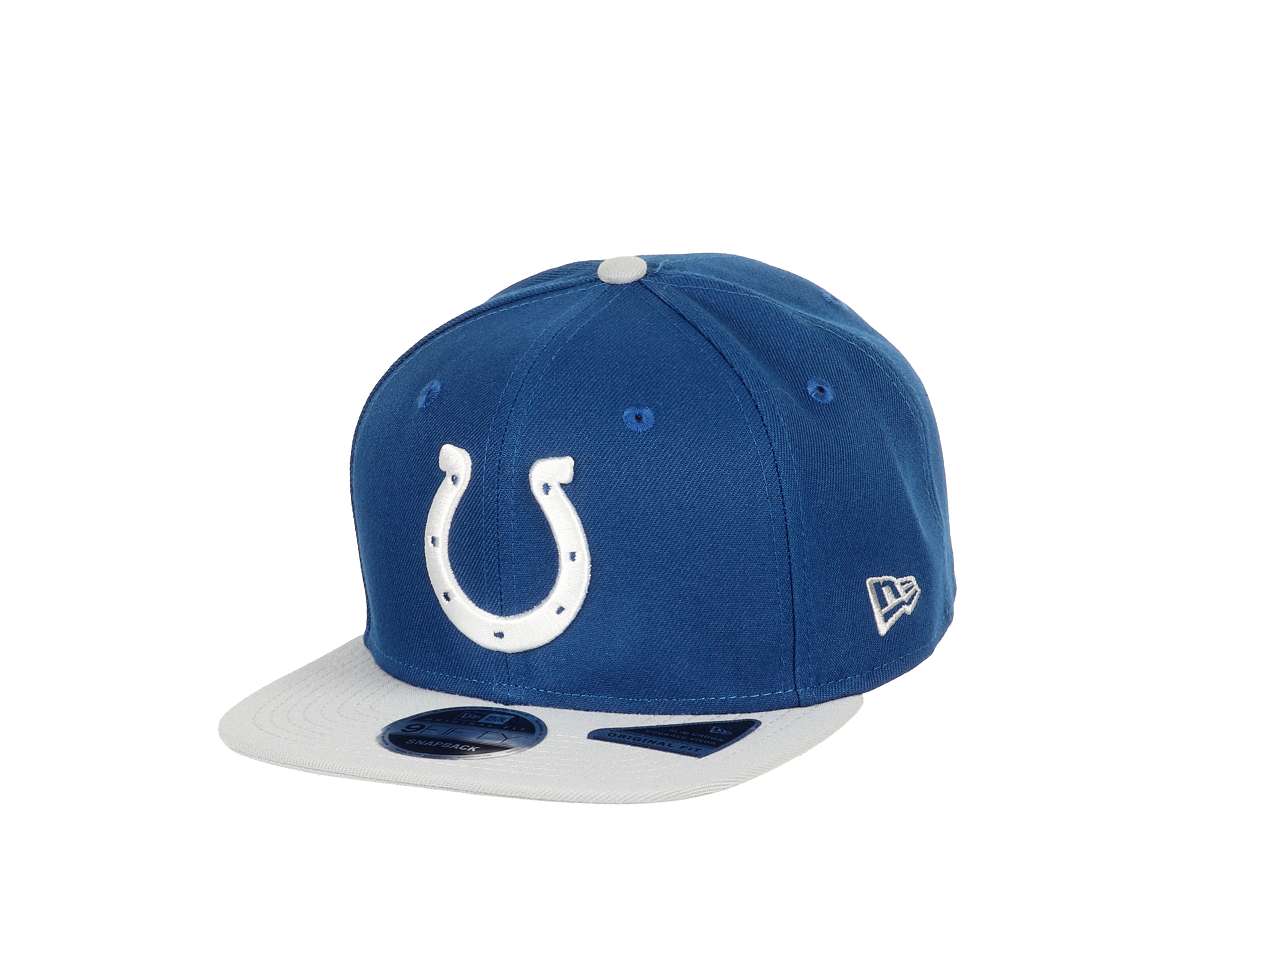 Indianapolis Colts NFL Two Tone Blue Gray 9Fifty Original Fit Snapback Cap New Era